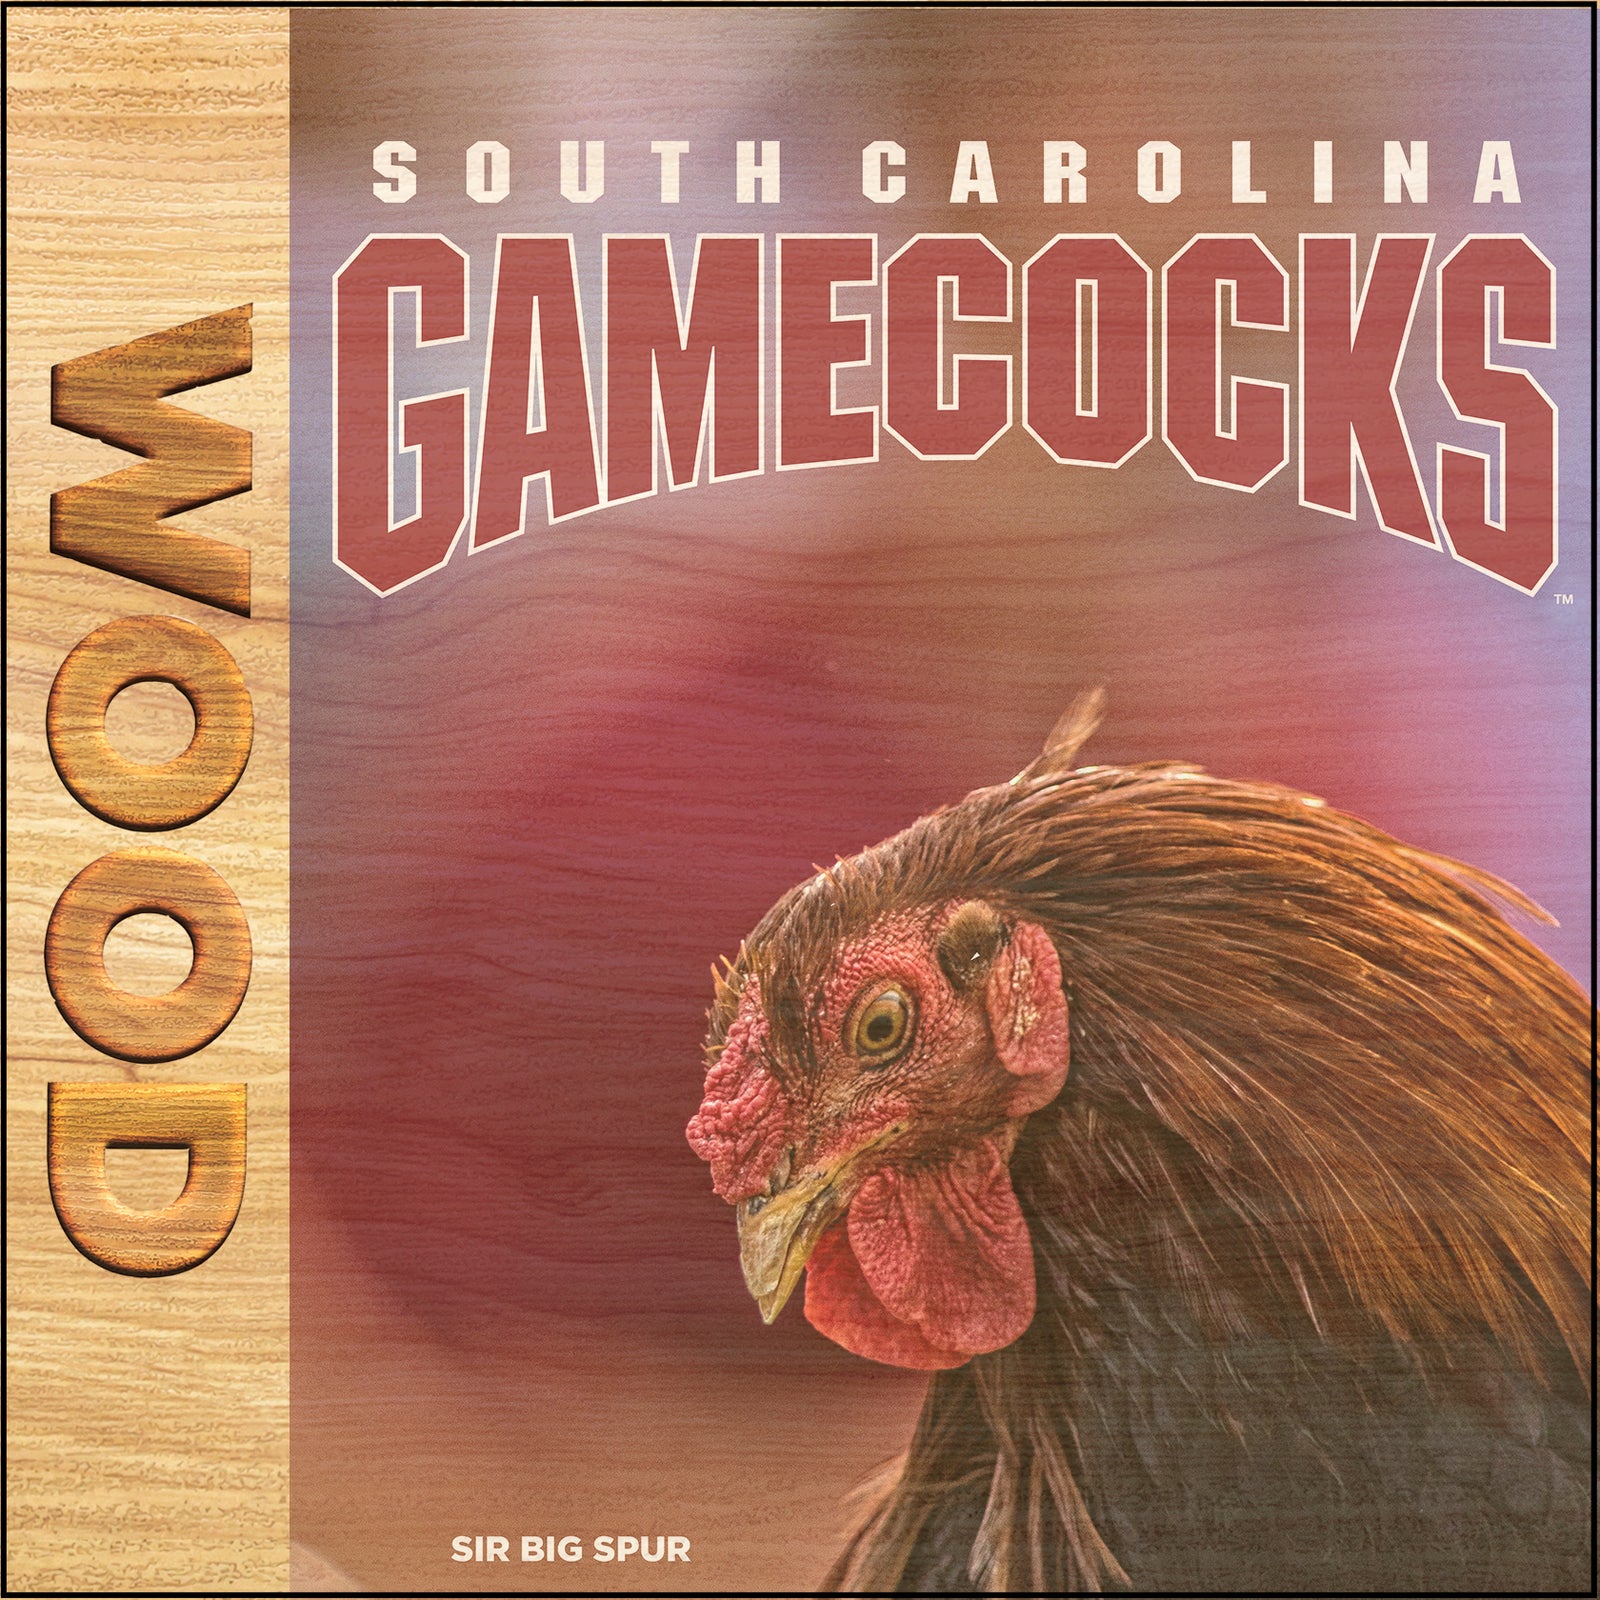 South Carolina Gamecocks-South Carolina Dad Bag Tag-College Wall Art